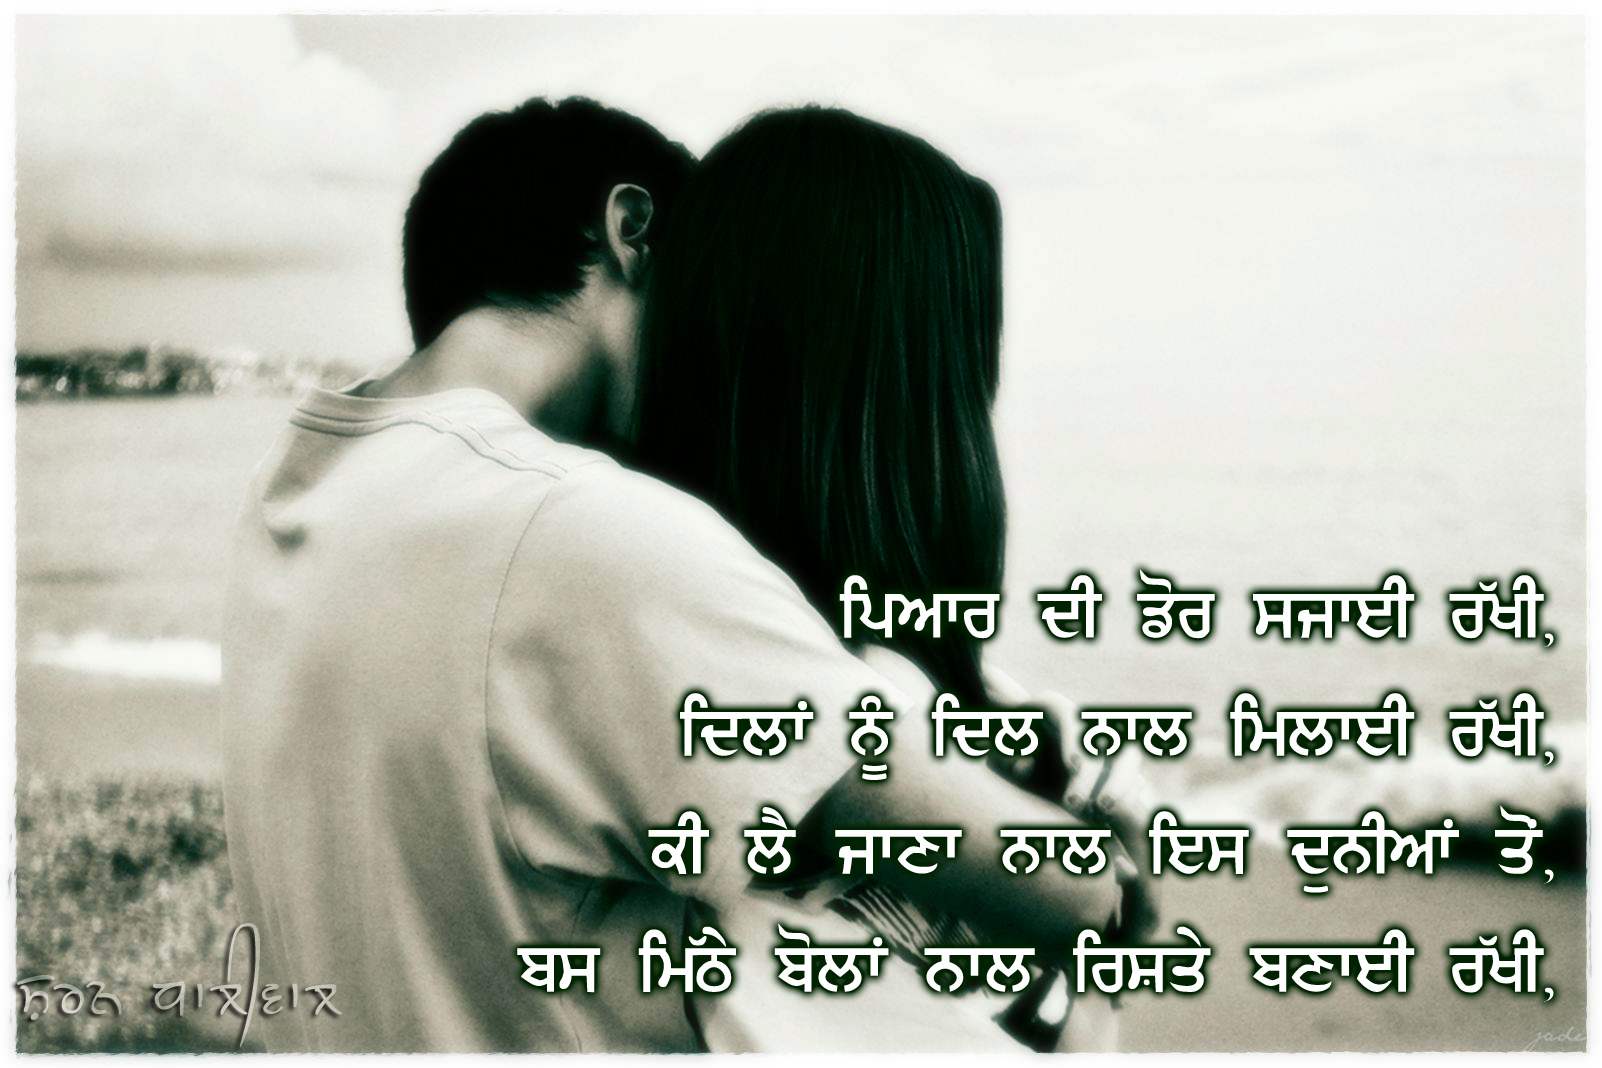 Funny Punjabi Quotes On Love.